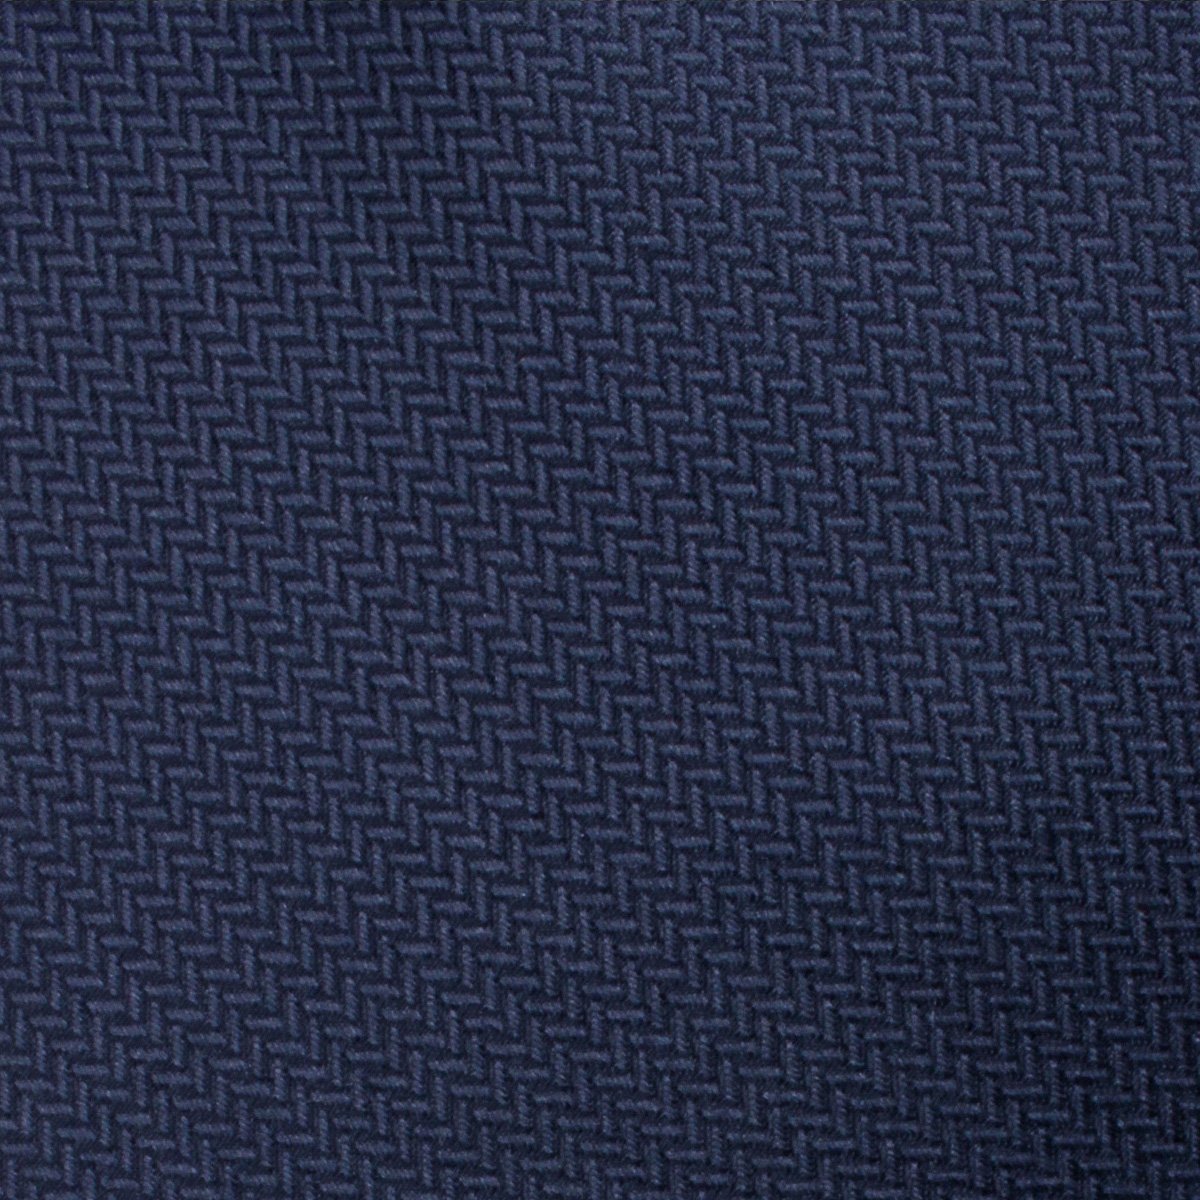 Navy Blue Diagonal Herringbone Necktie Fabric